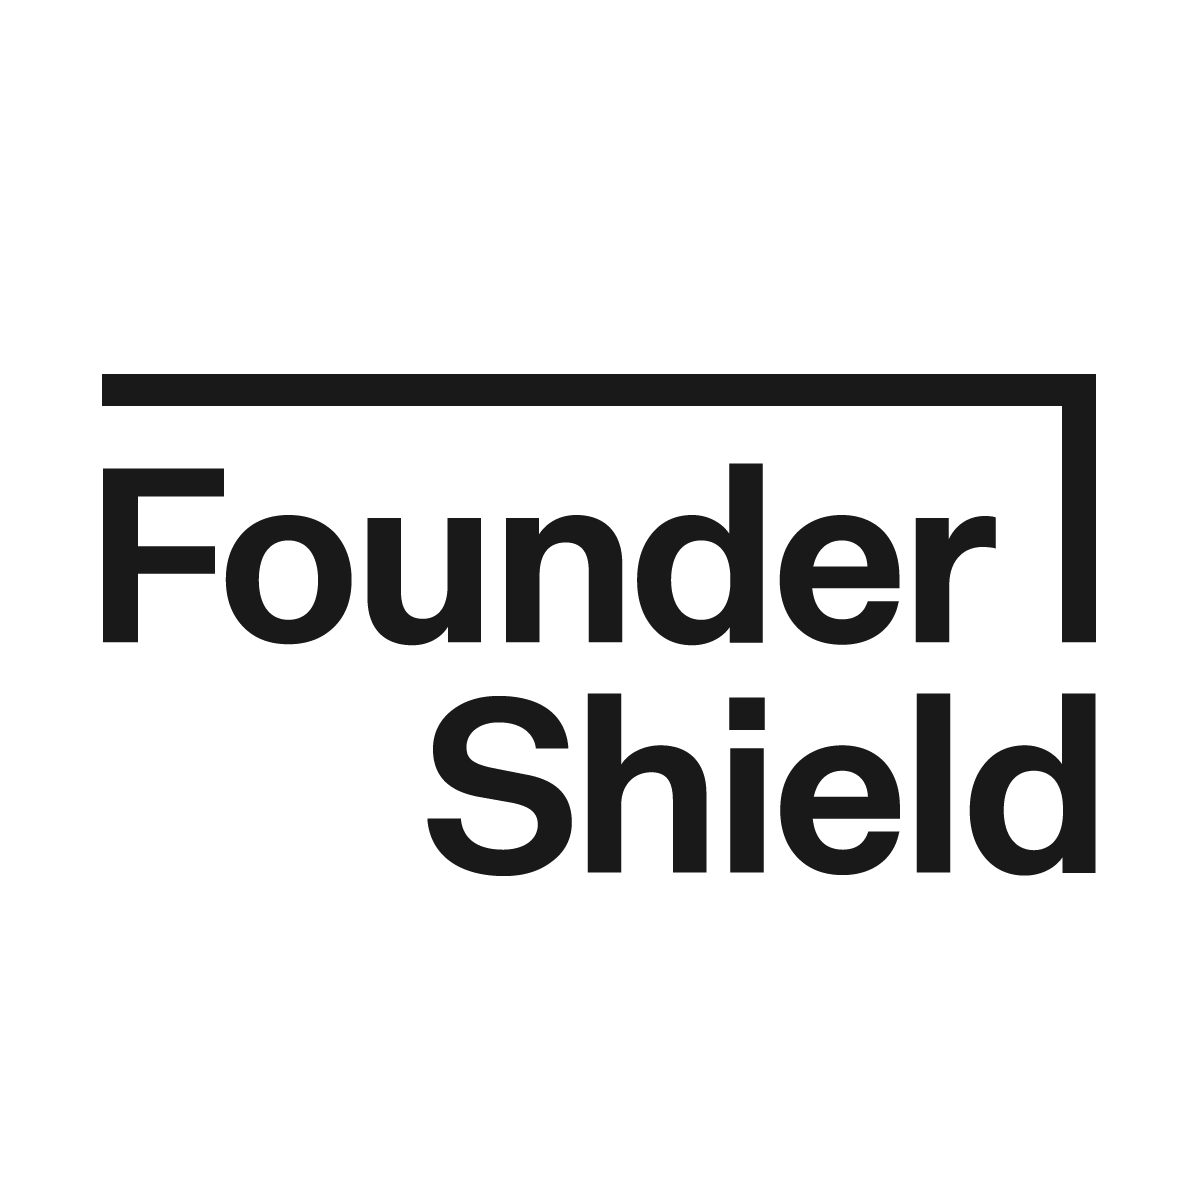 Founder Shield